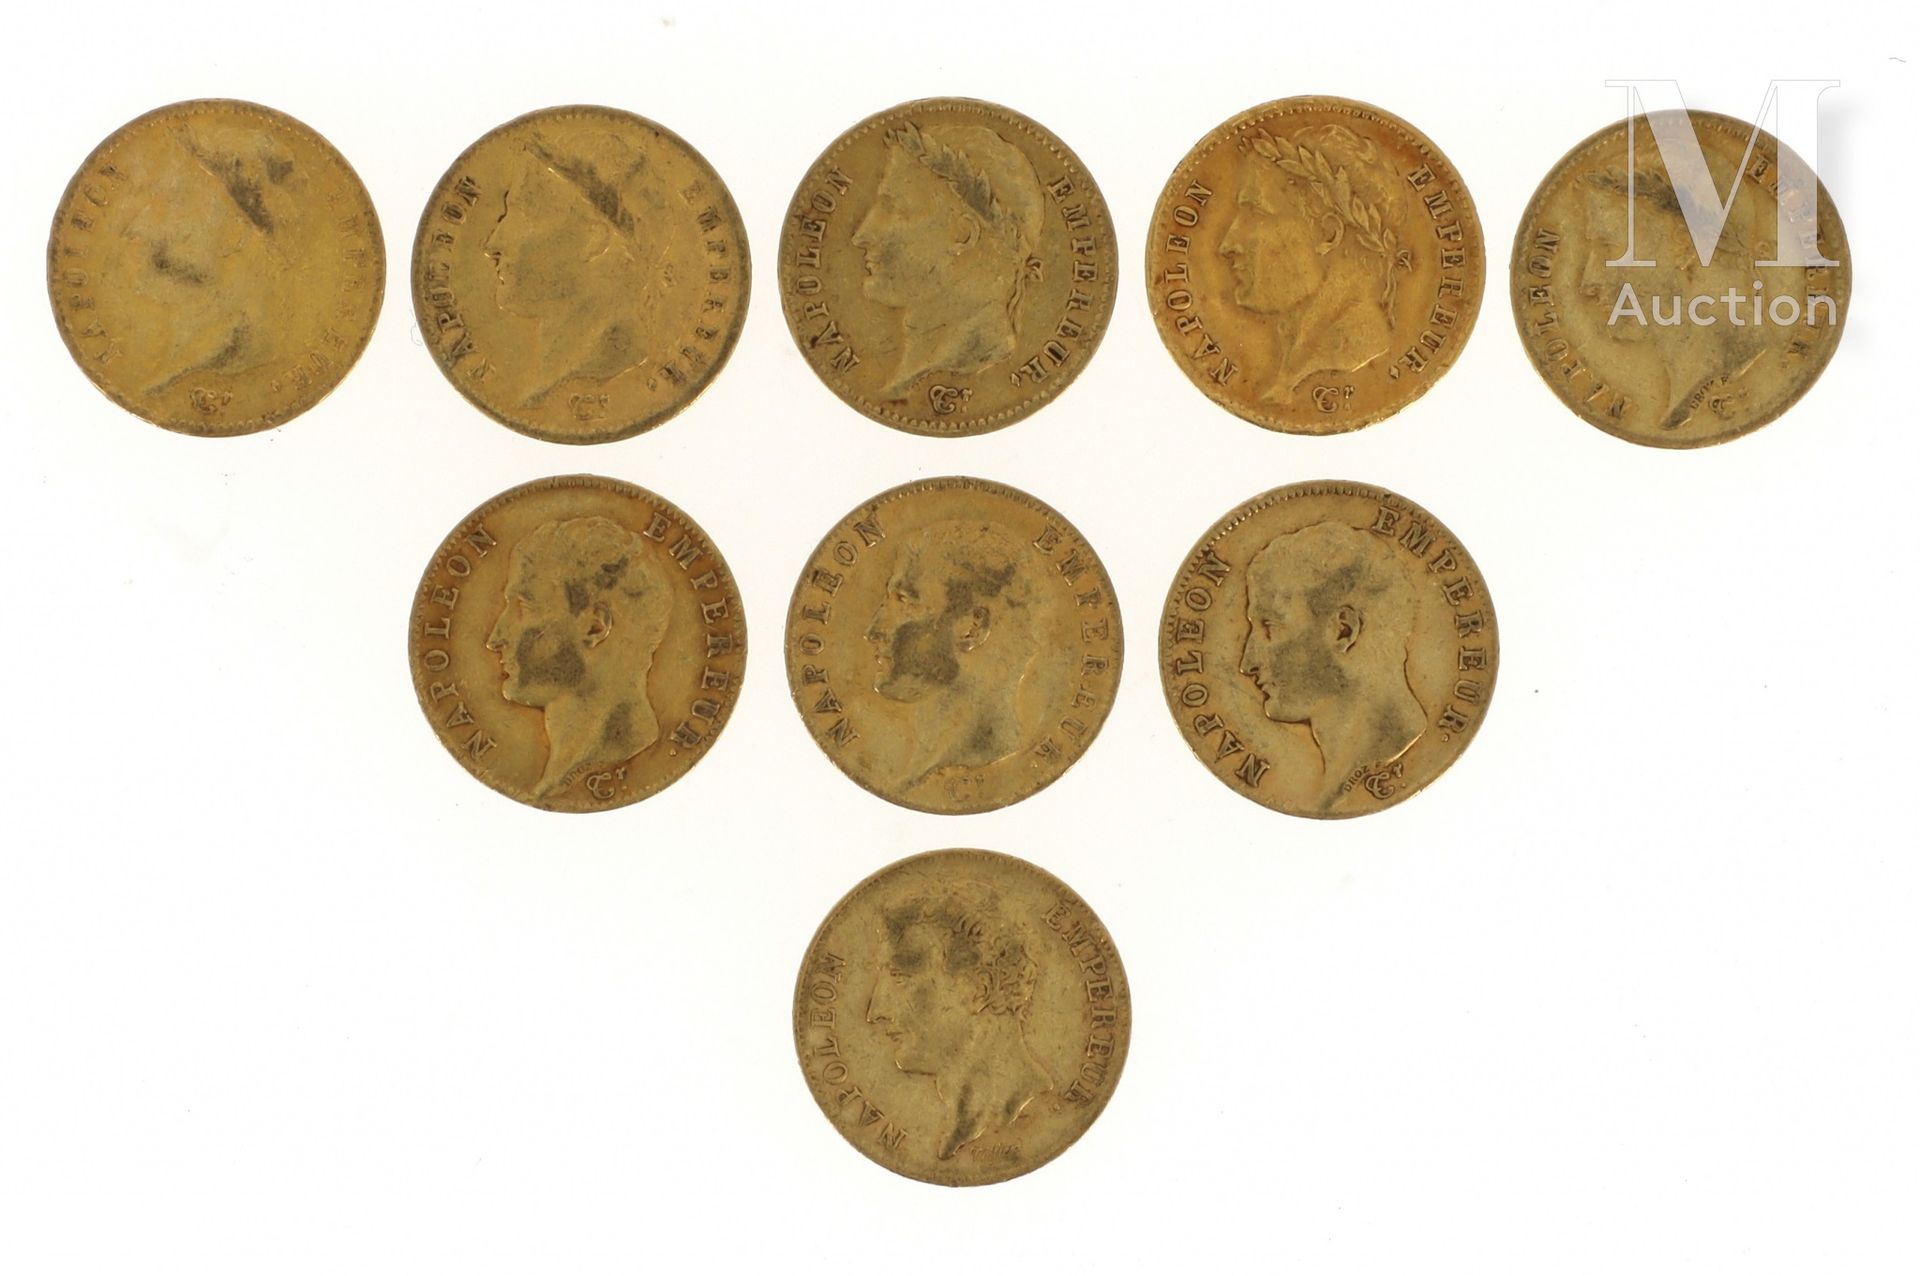 Neuf pièces 20 FF or Neuf pièces en or de 20 FF Napoléon Empereur :

- 4 x 20 FF&hellip;